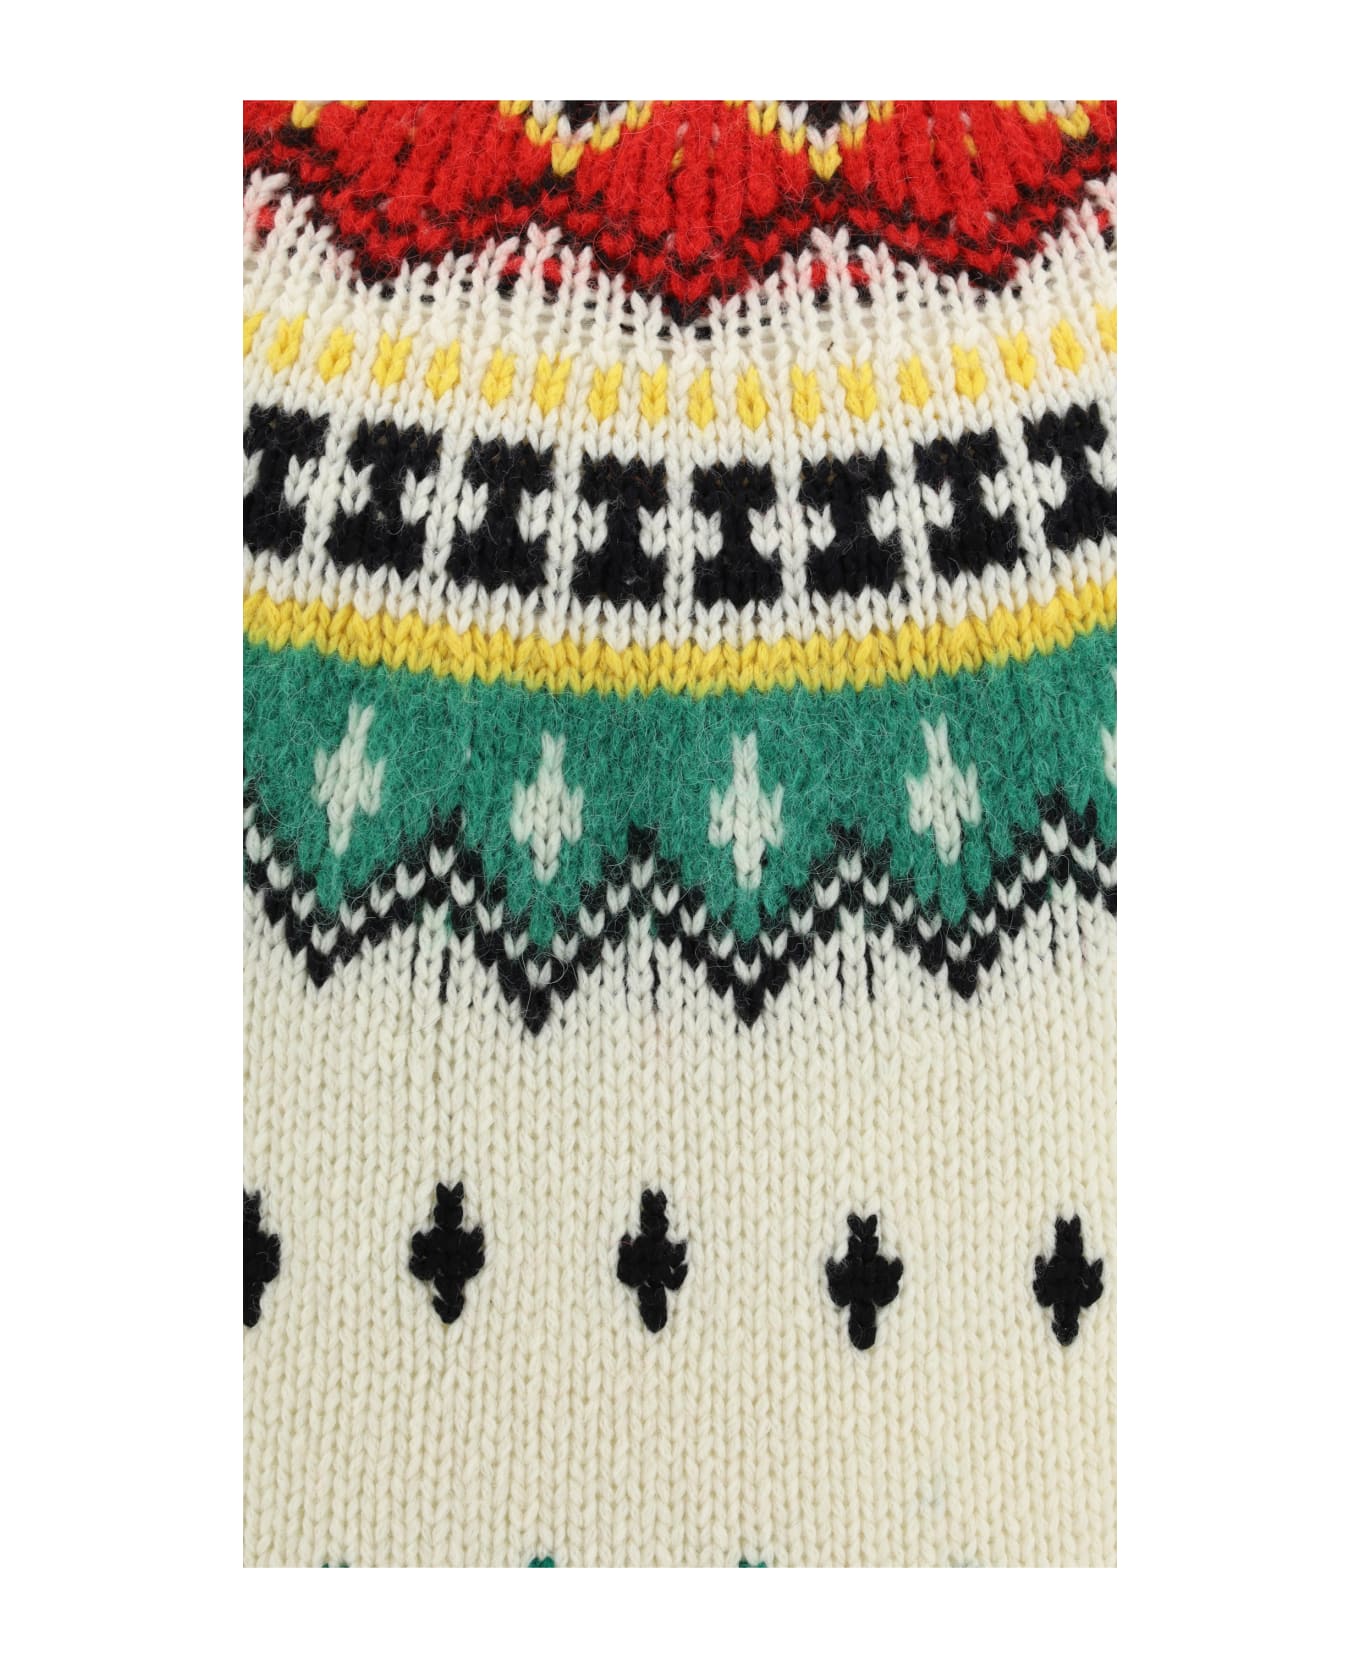 Moncler Grenoble Tricot Sweater - MultiColour